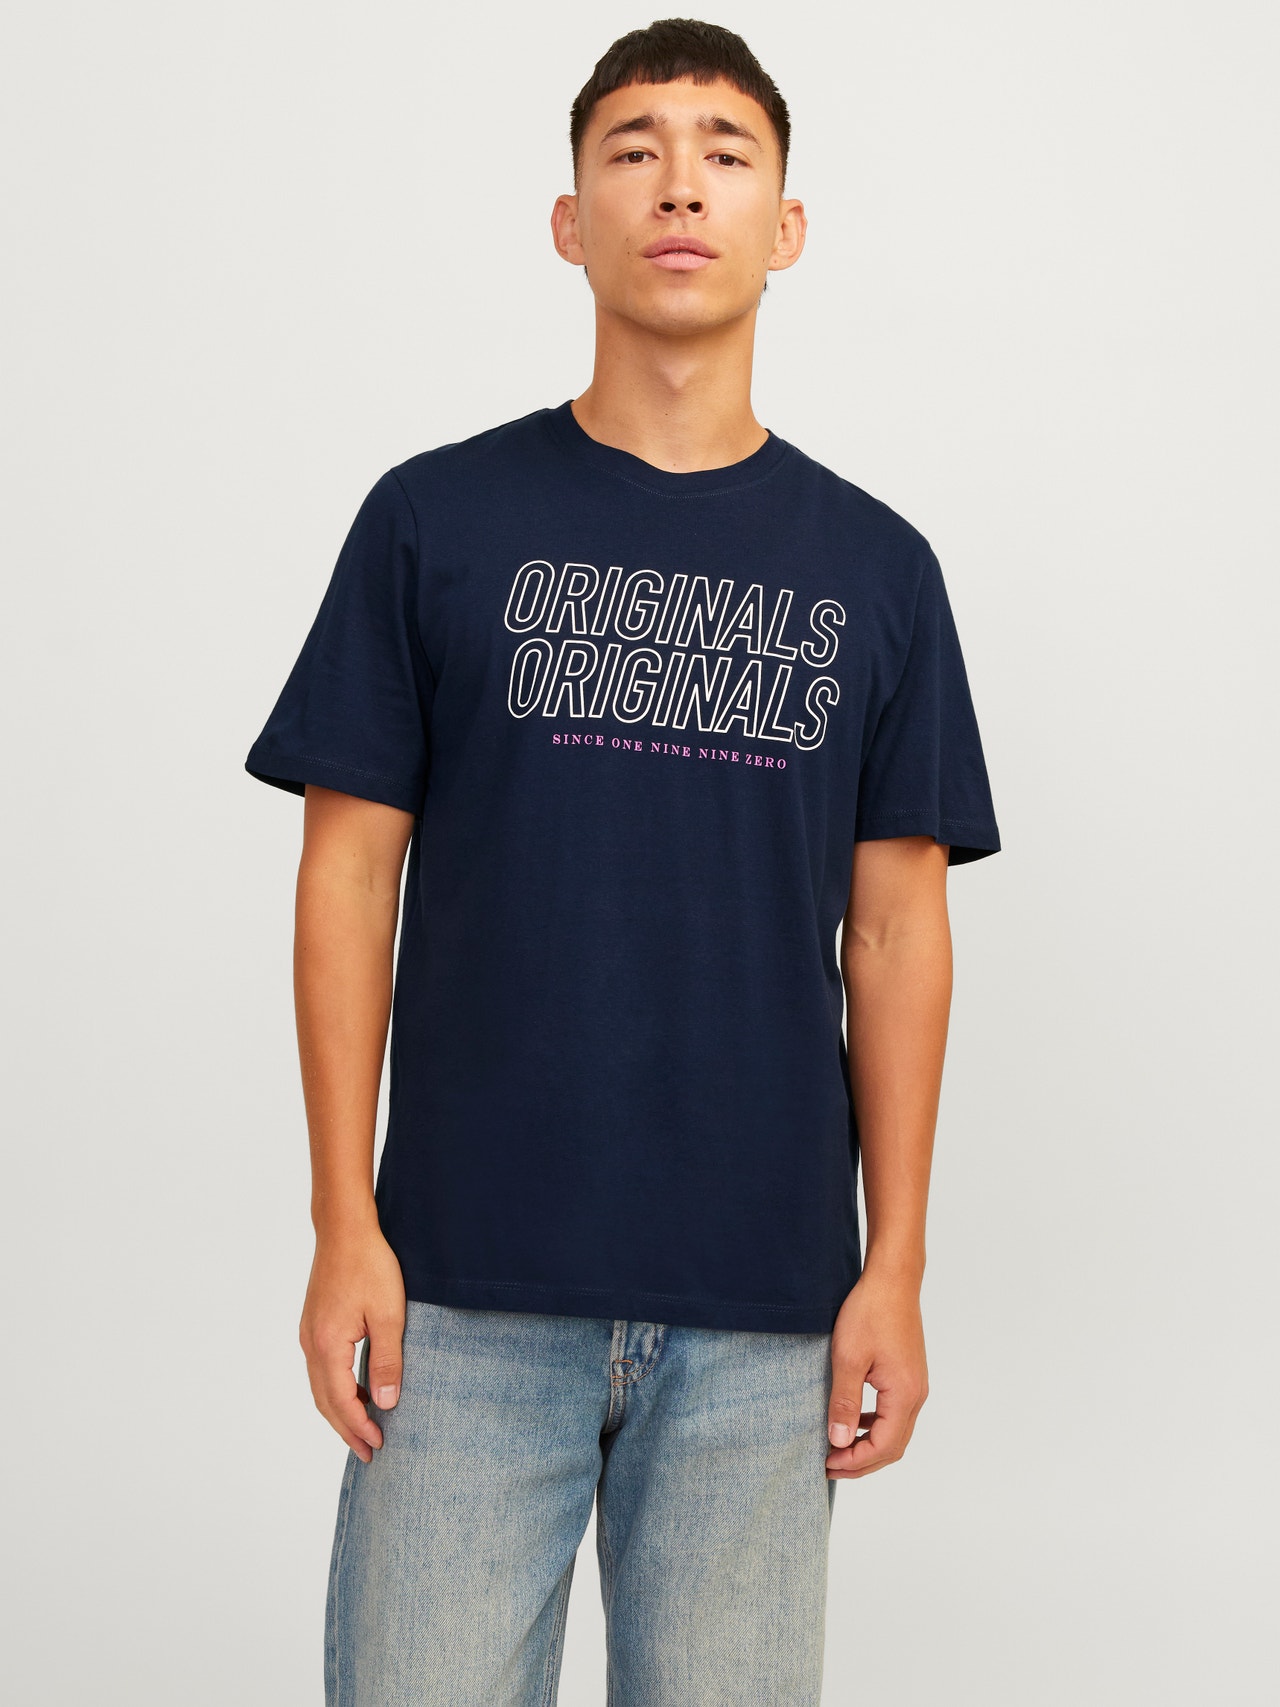 Jack & Jones Καλοκαιρινό μπλουζάκι -Navy Blazer - 12255078